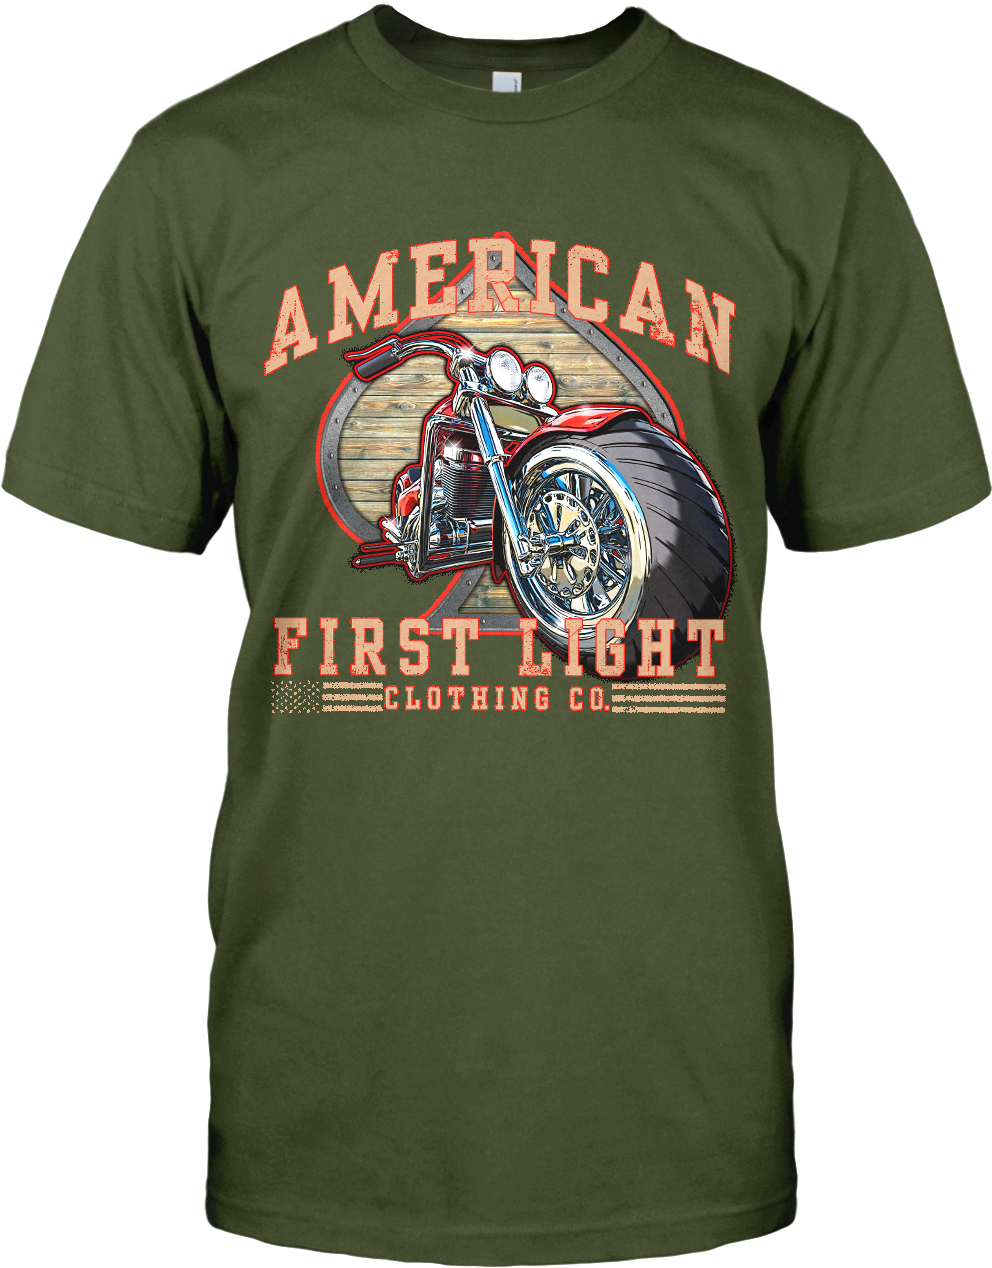 Unisex Short Sleeve T-Shirt with AFL Motorcycle